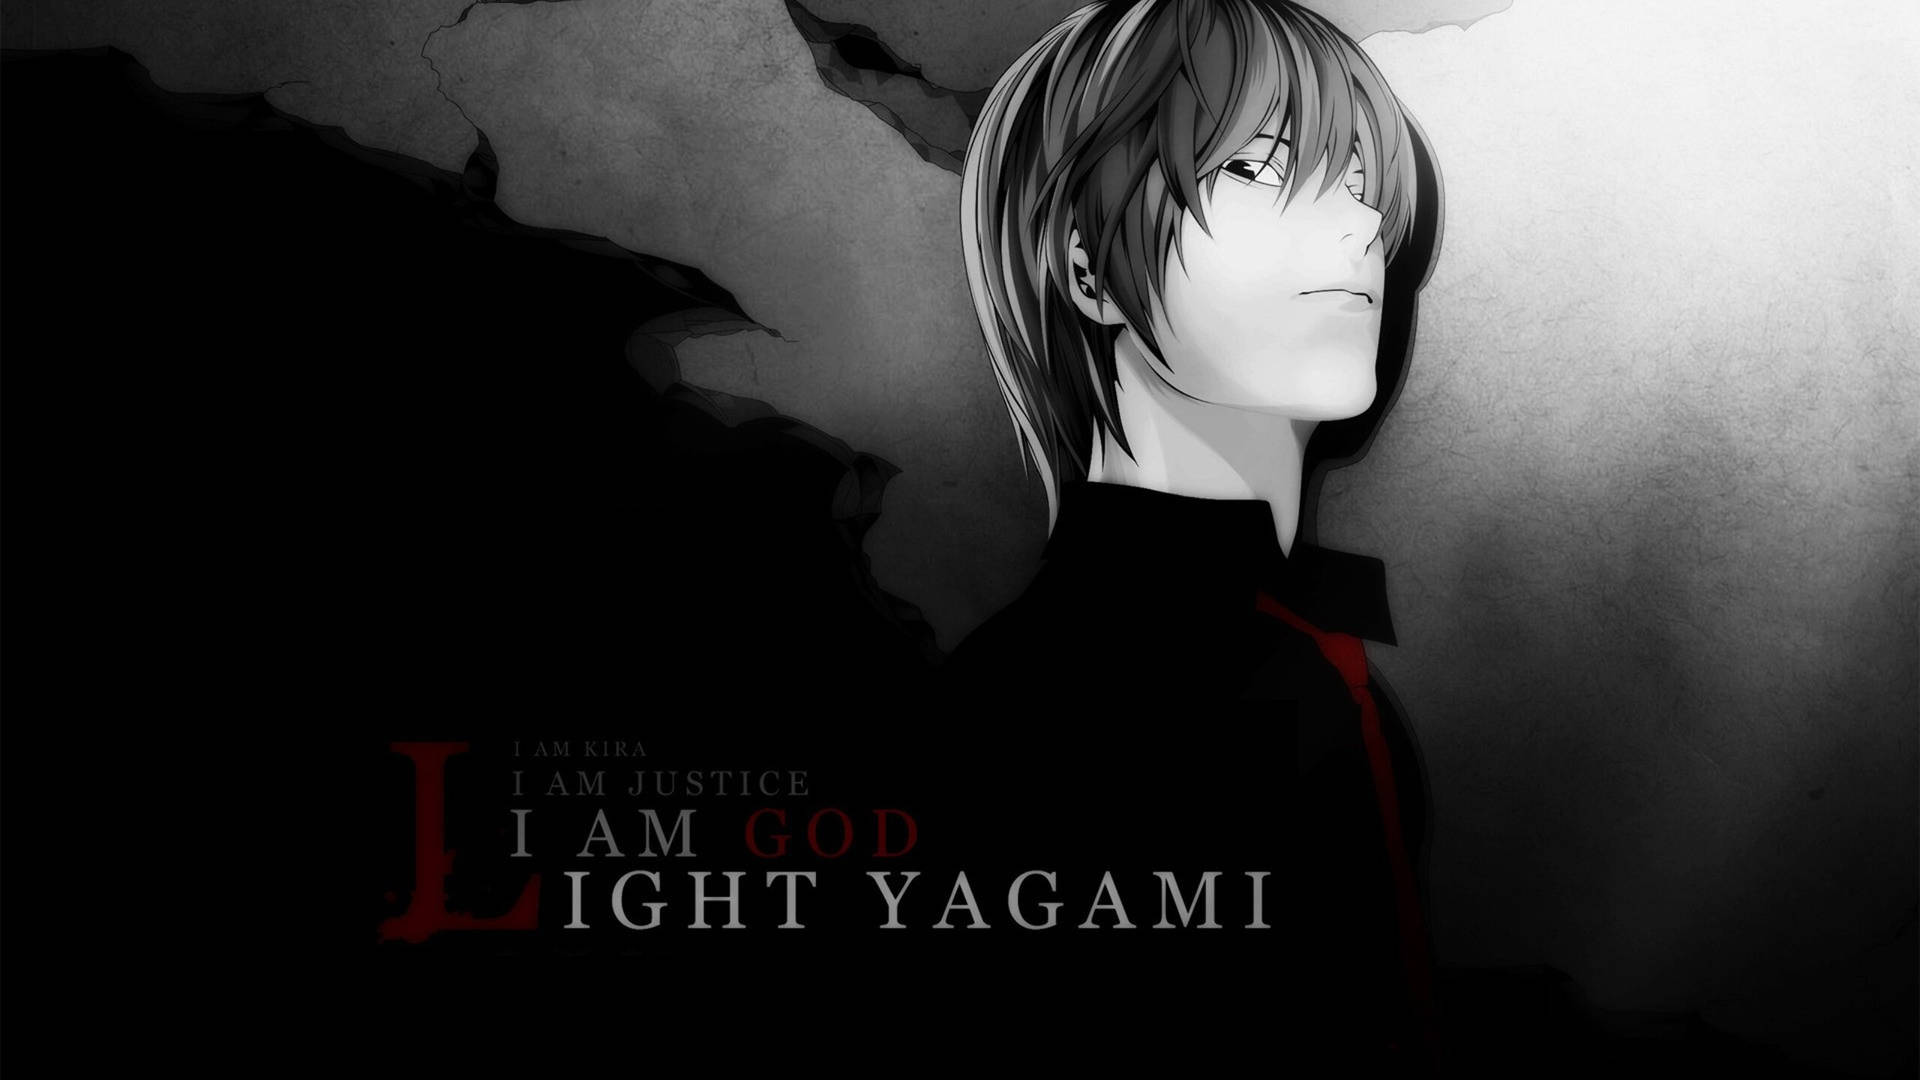 Light-Yagami-God's Profile 